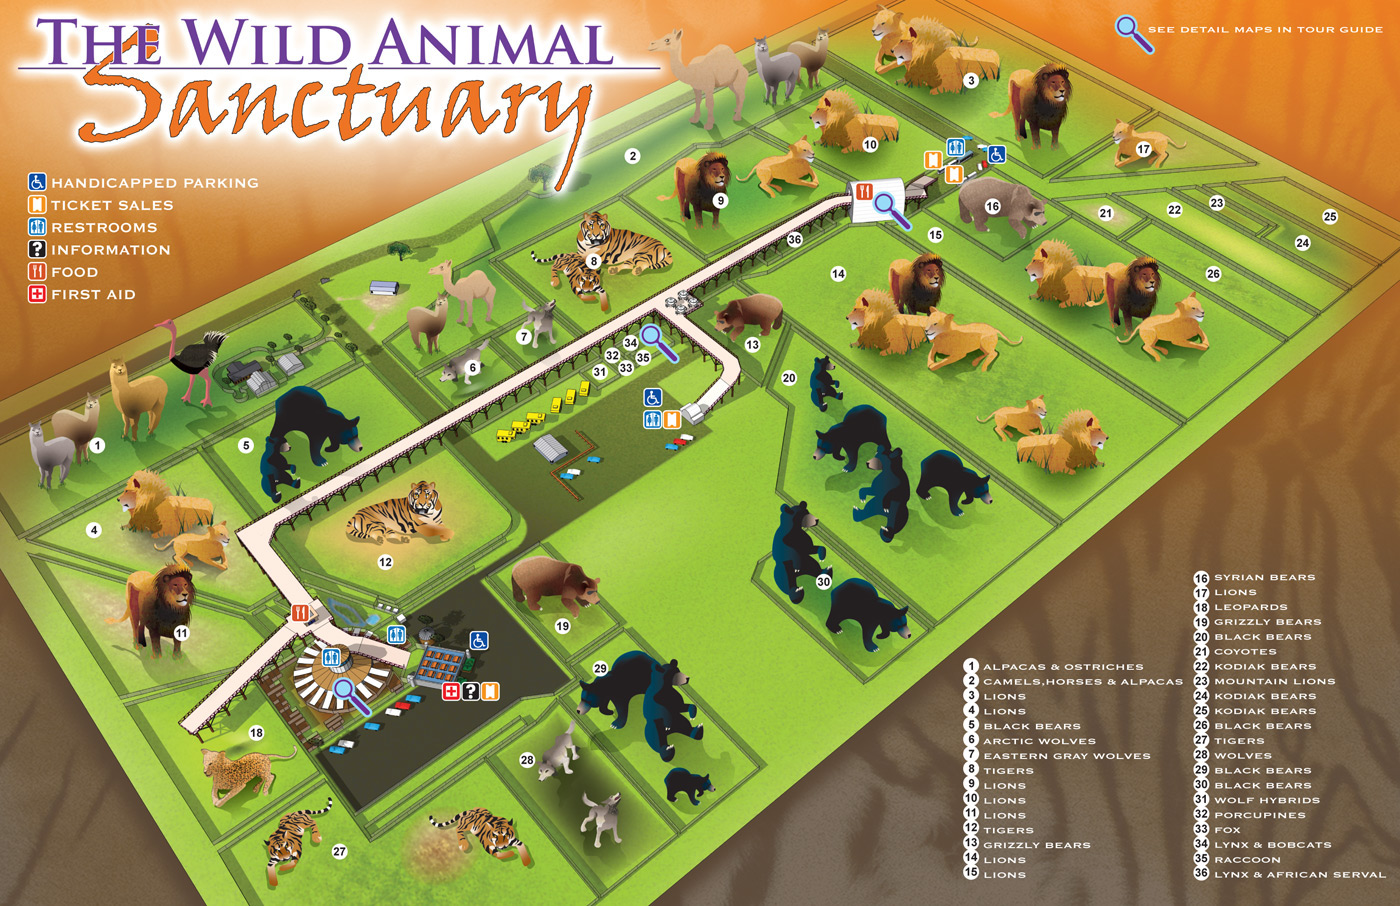 Animal Sanctuary Illustrated Maps on Behance